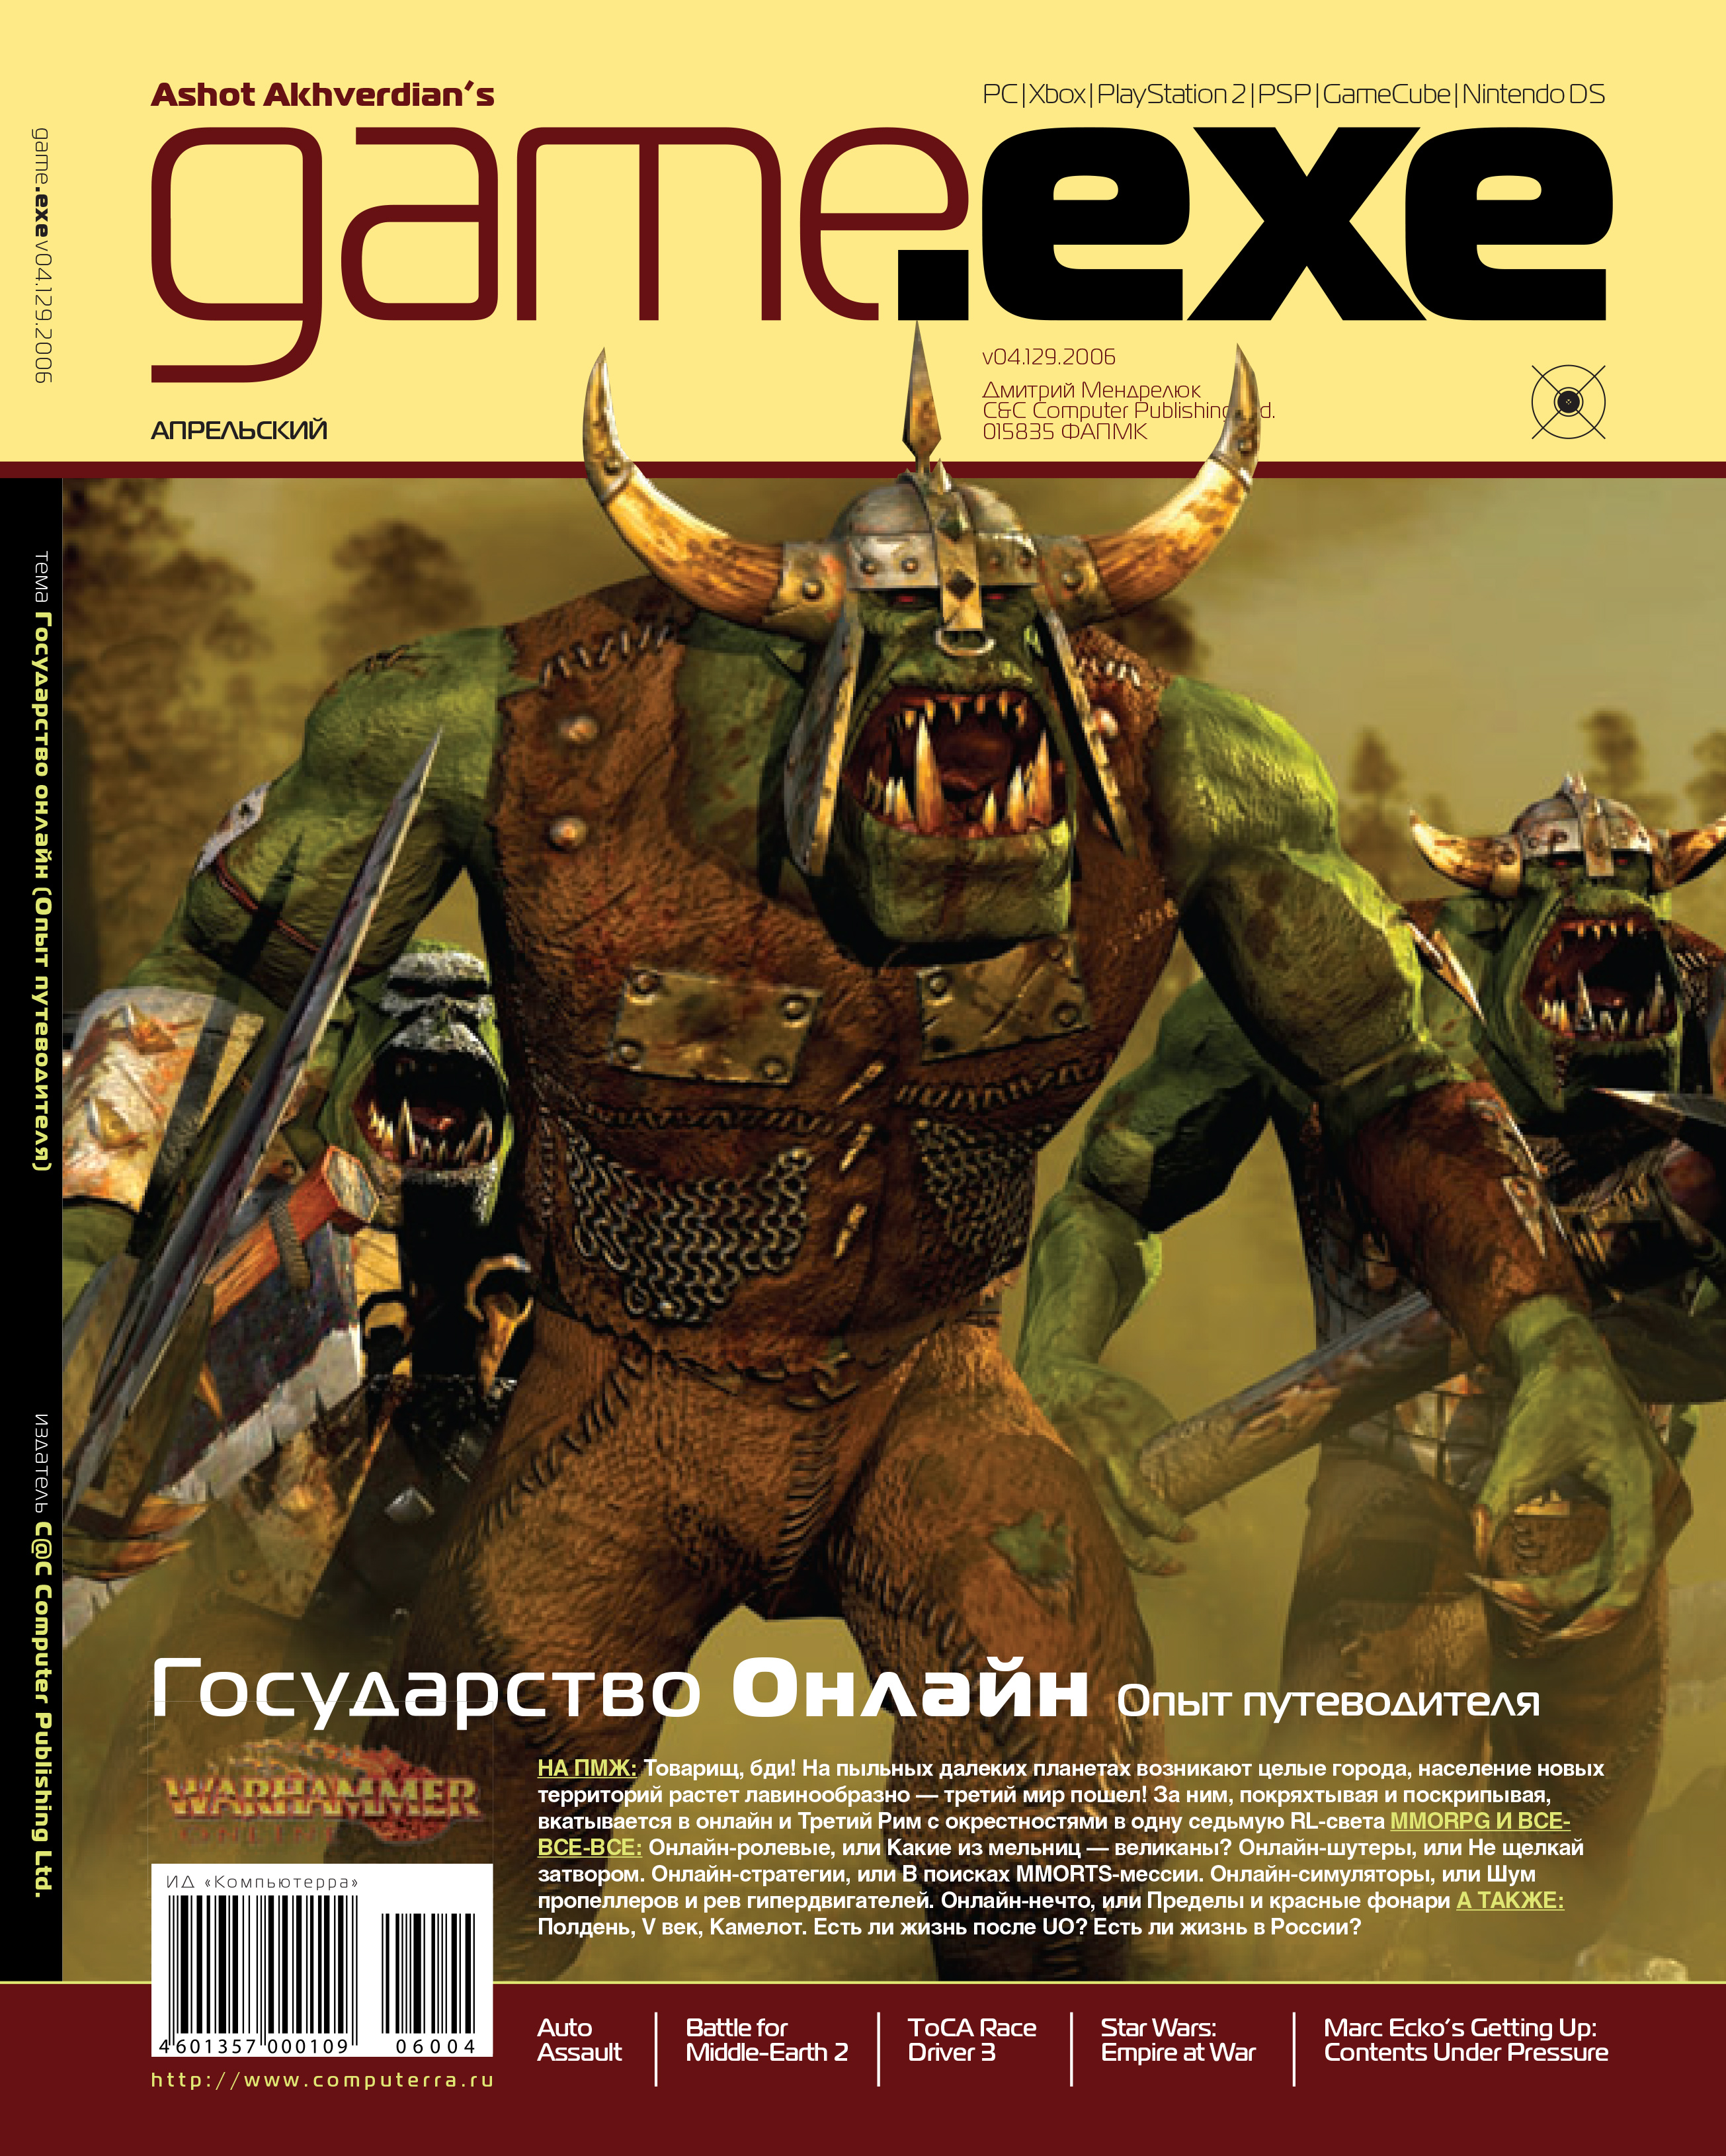 Download game exe. Game exe журнал. Game.exe обложки. Game exe журнал 2006. PC игры журнал.